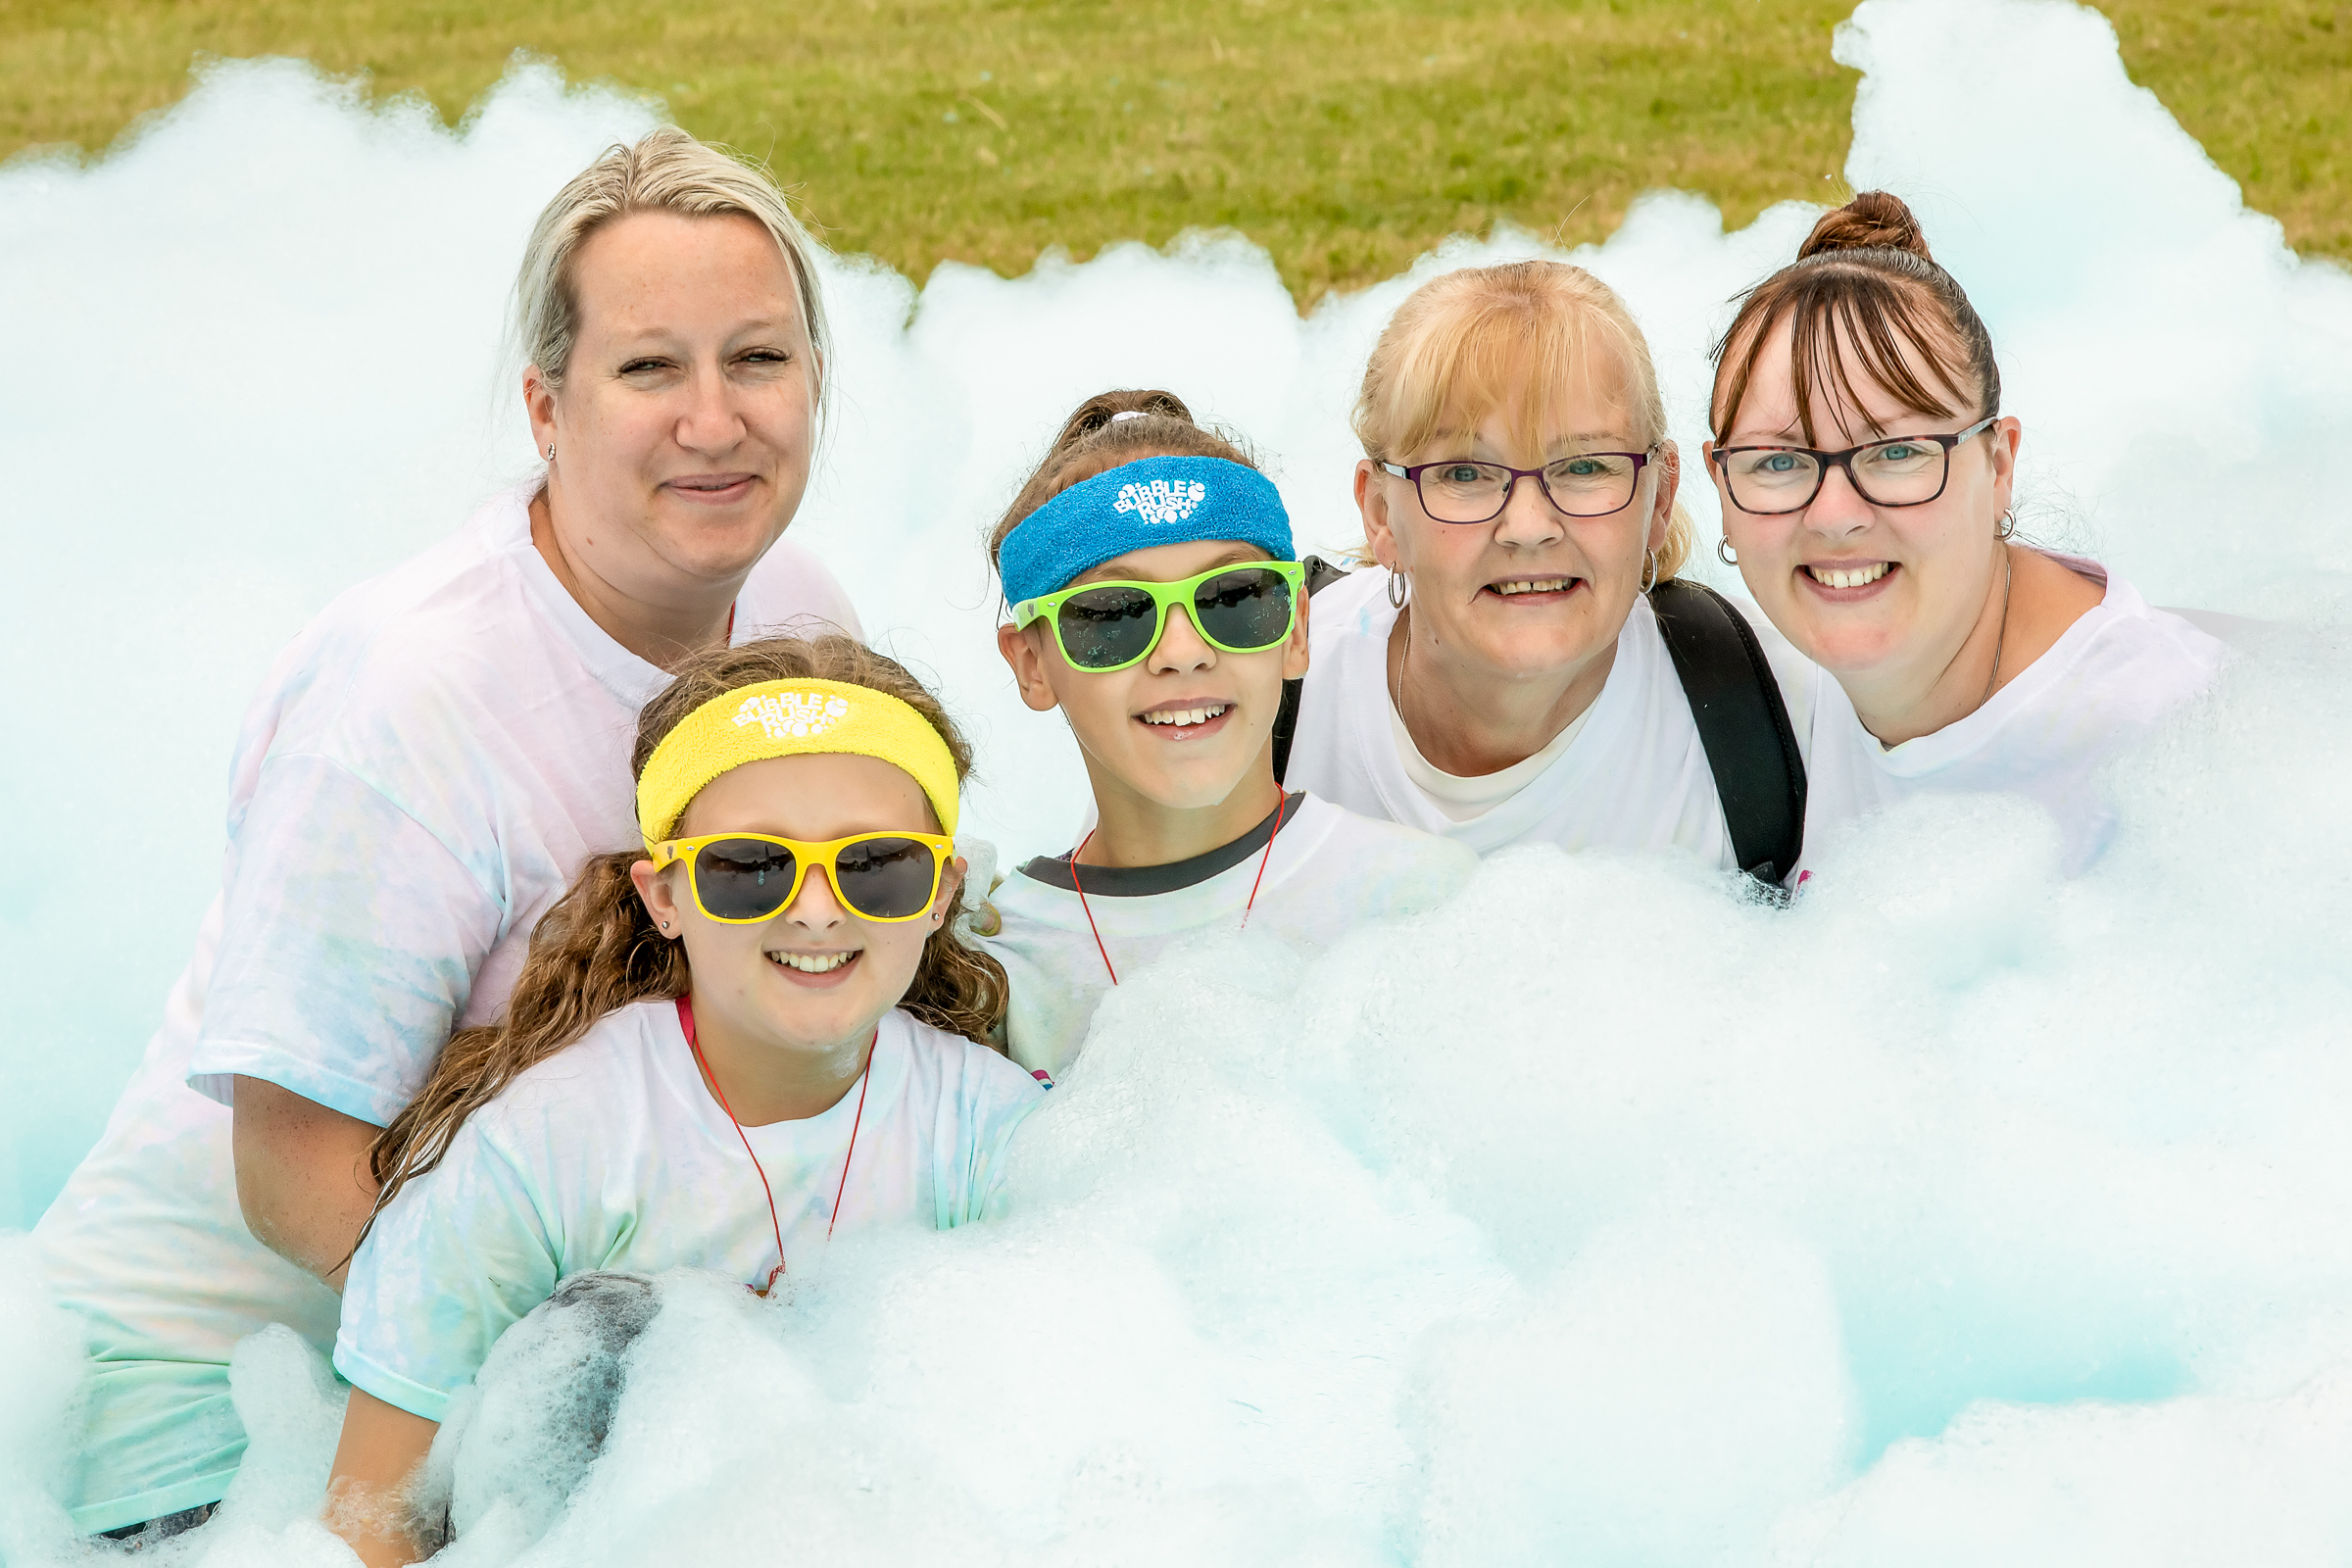 A group of Bubble Rush participants surrounded by foam bubbles.